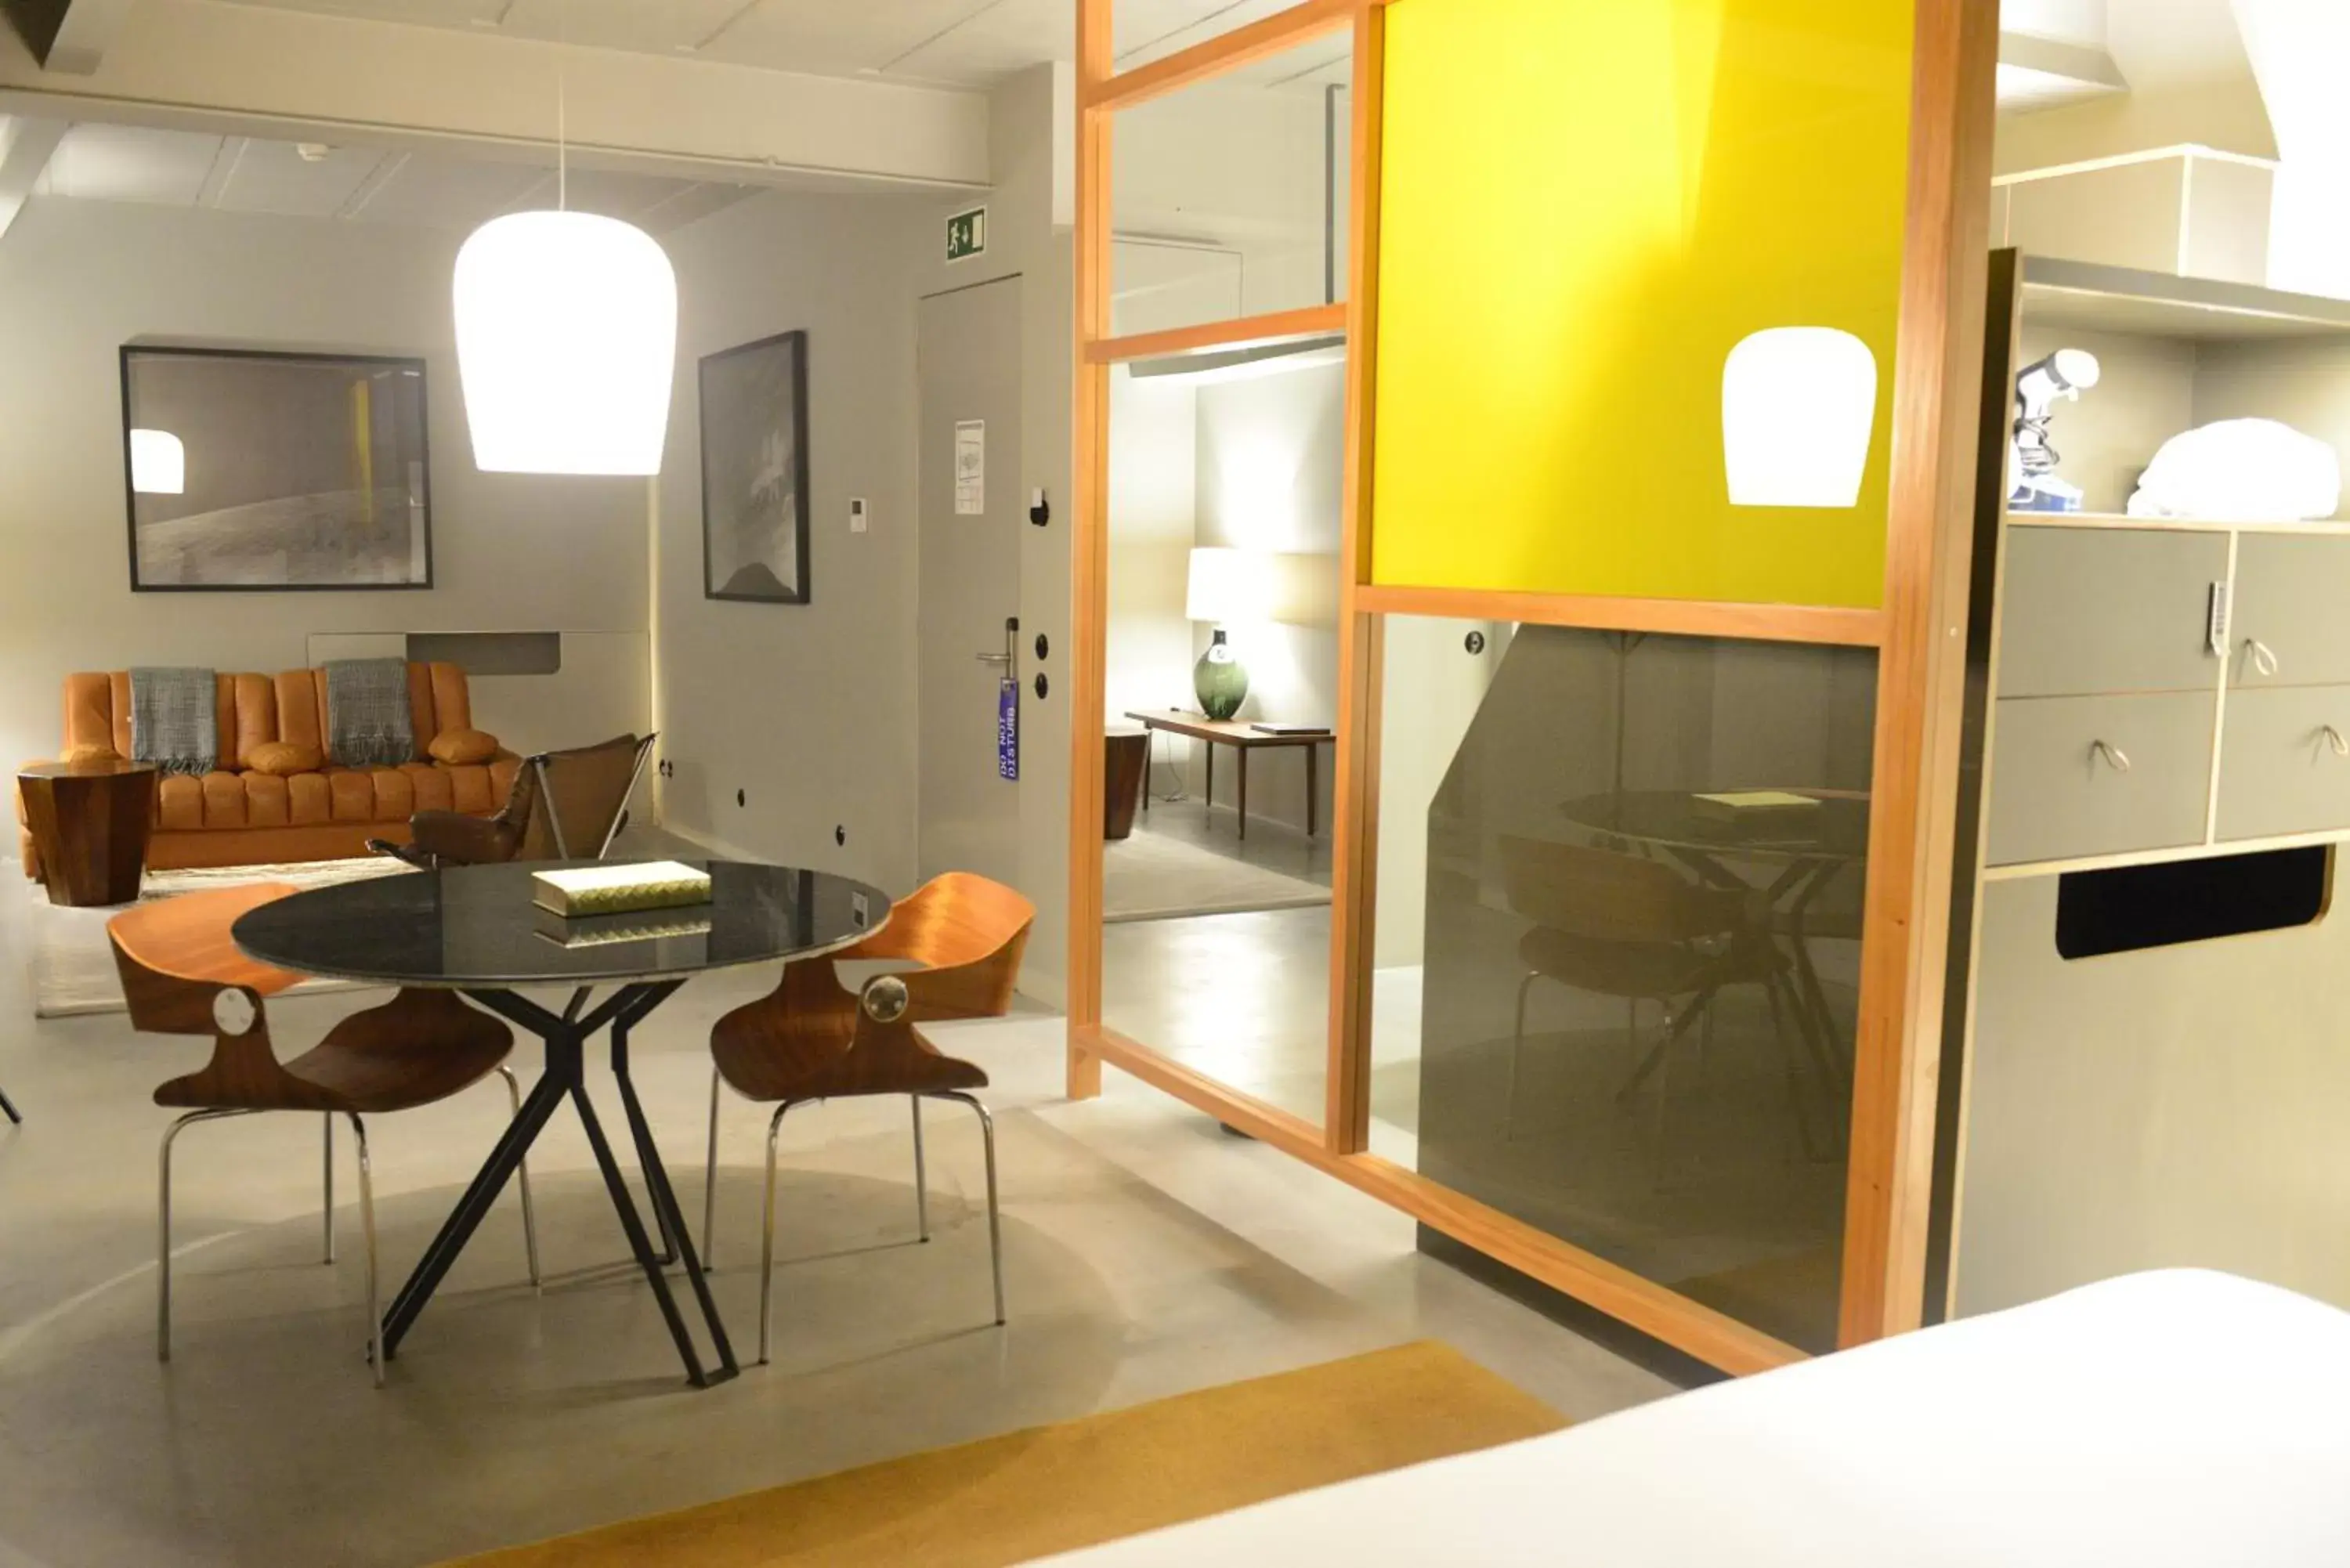 Bedroom, Dining Area in Raw Culture Art & Lofts Bairro Alto